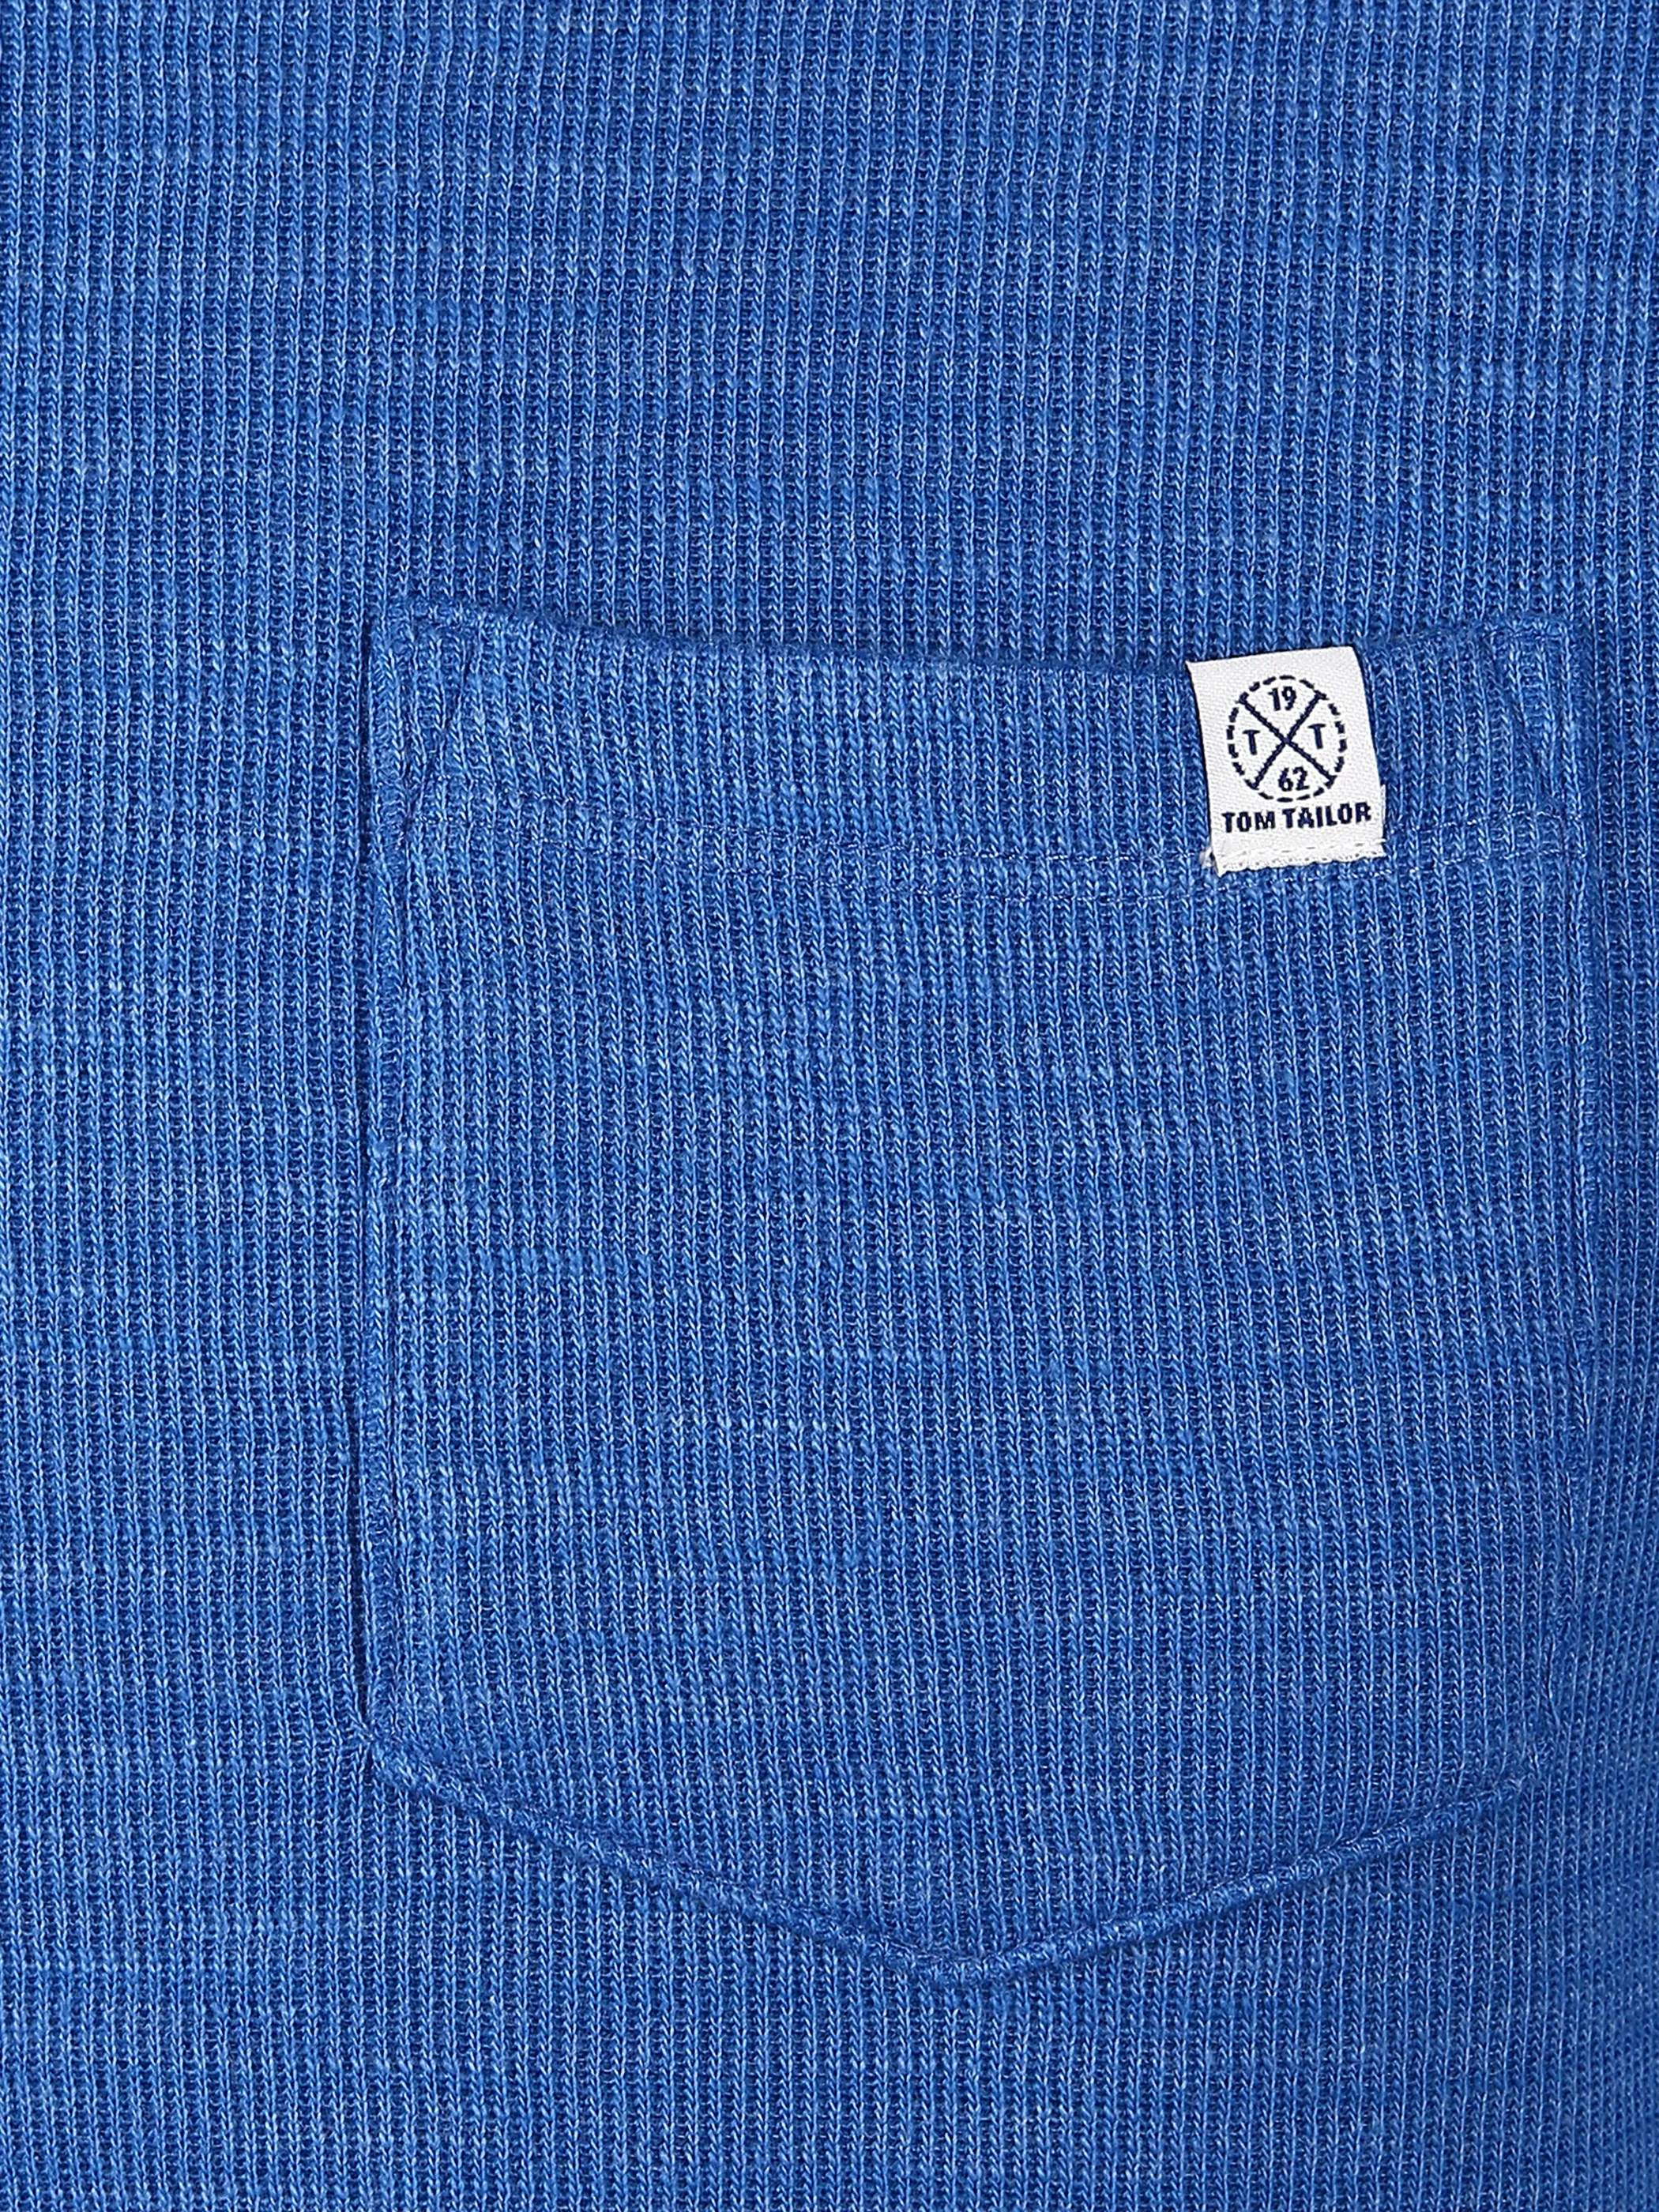 Tom Tailor 1015016 fabric mix sweatshirt Blau 833023 20480 3